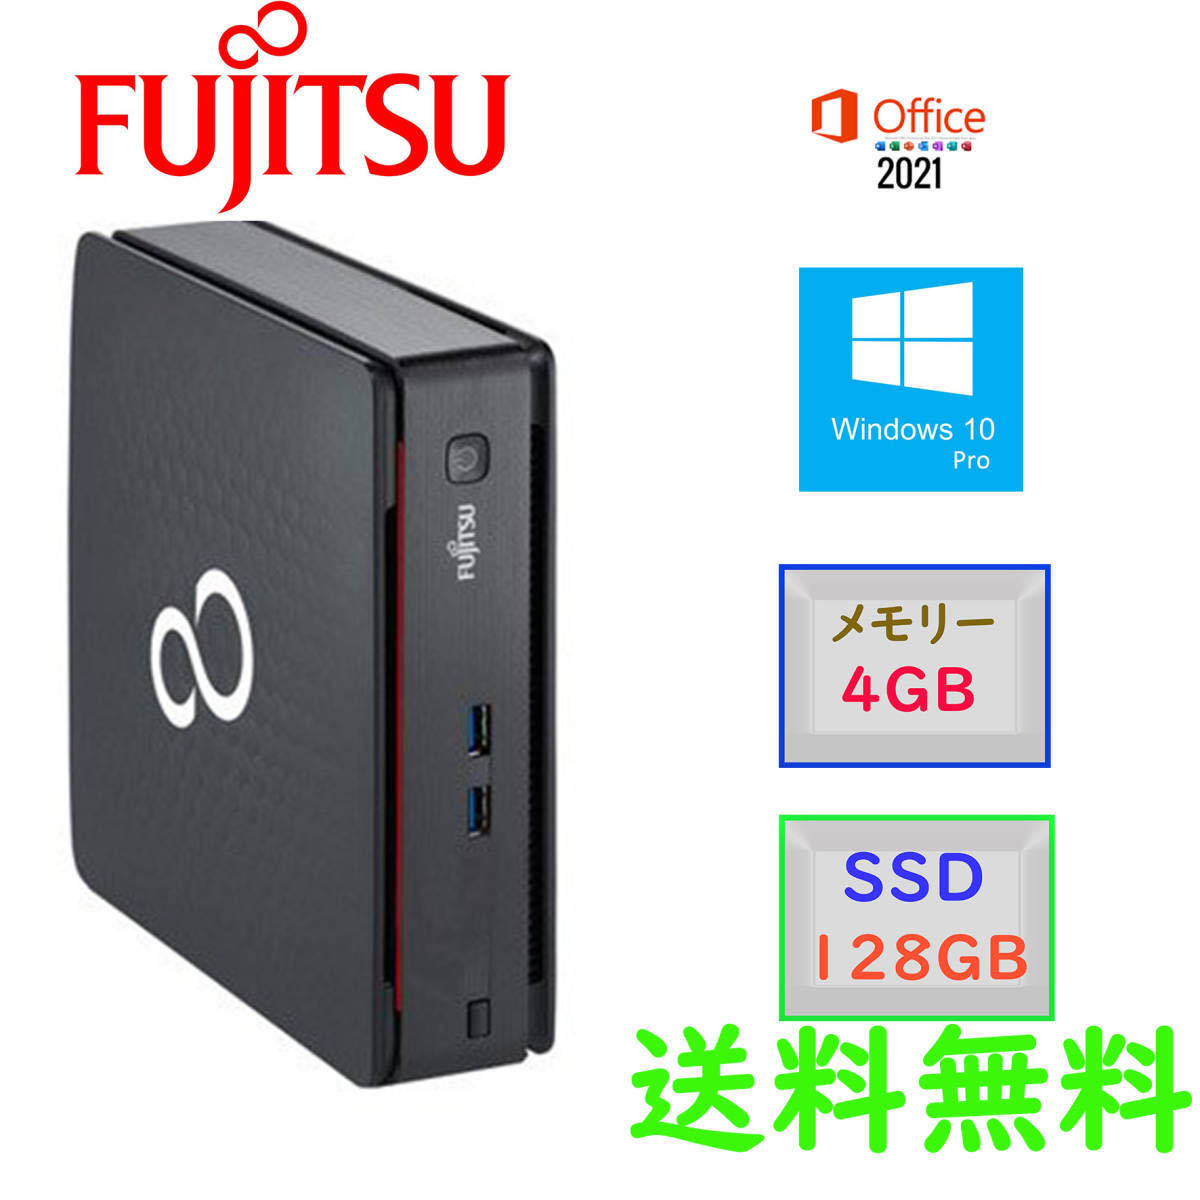 ◆ FUJITSU ESPRIMO Q520/K◆ 爆速SSD128GB/メモリ4GB/省スペース小型 MINI PC/Win10Pro64bit/Microsoft office2021搭載/Celeron-G1840T